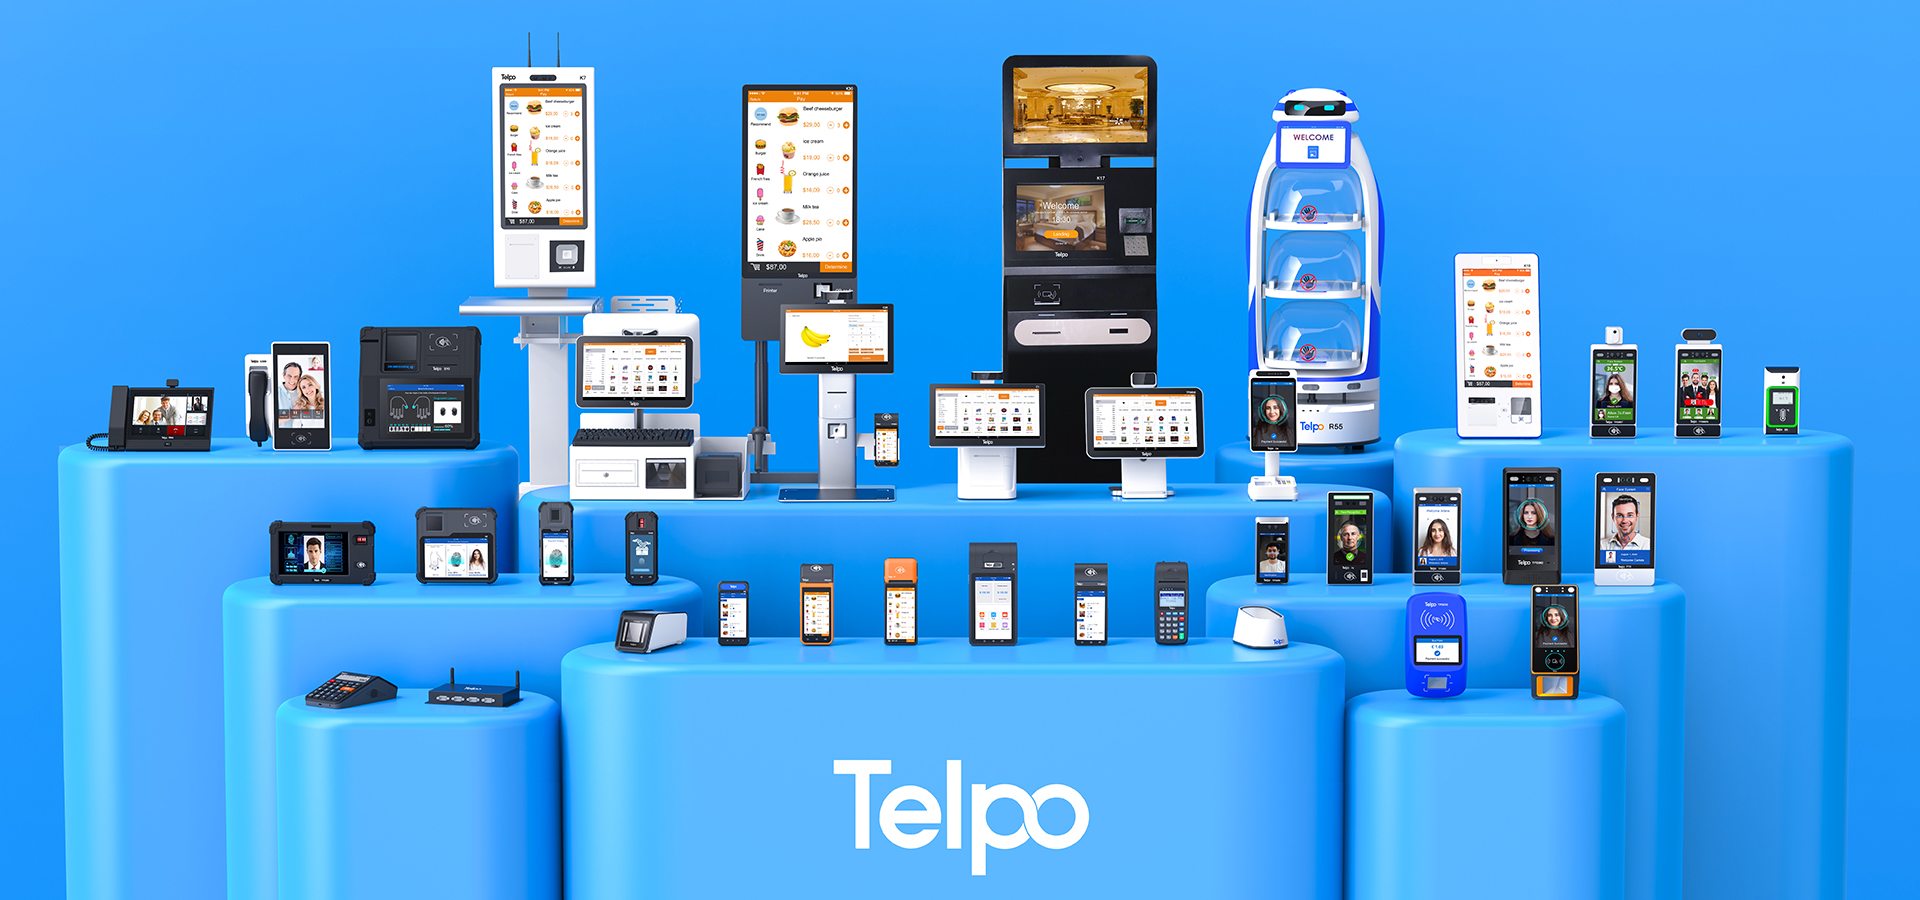 Telpo-products-1.jpg